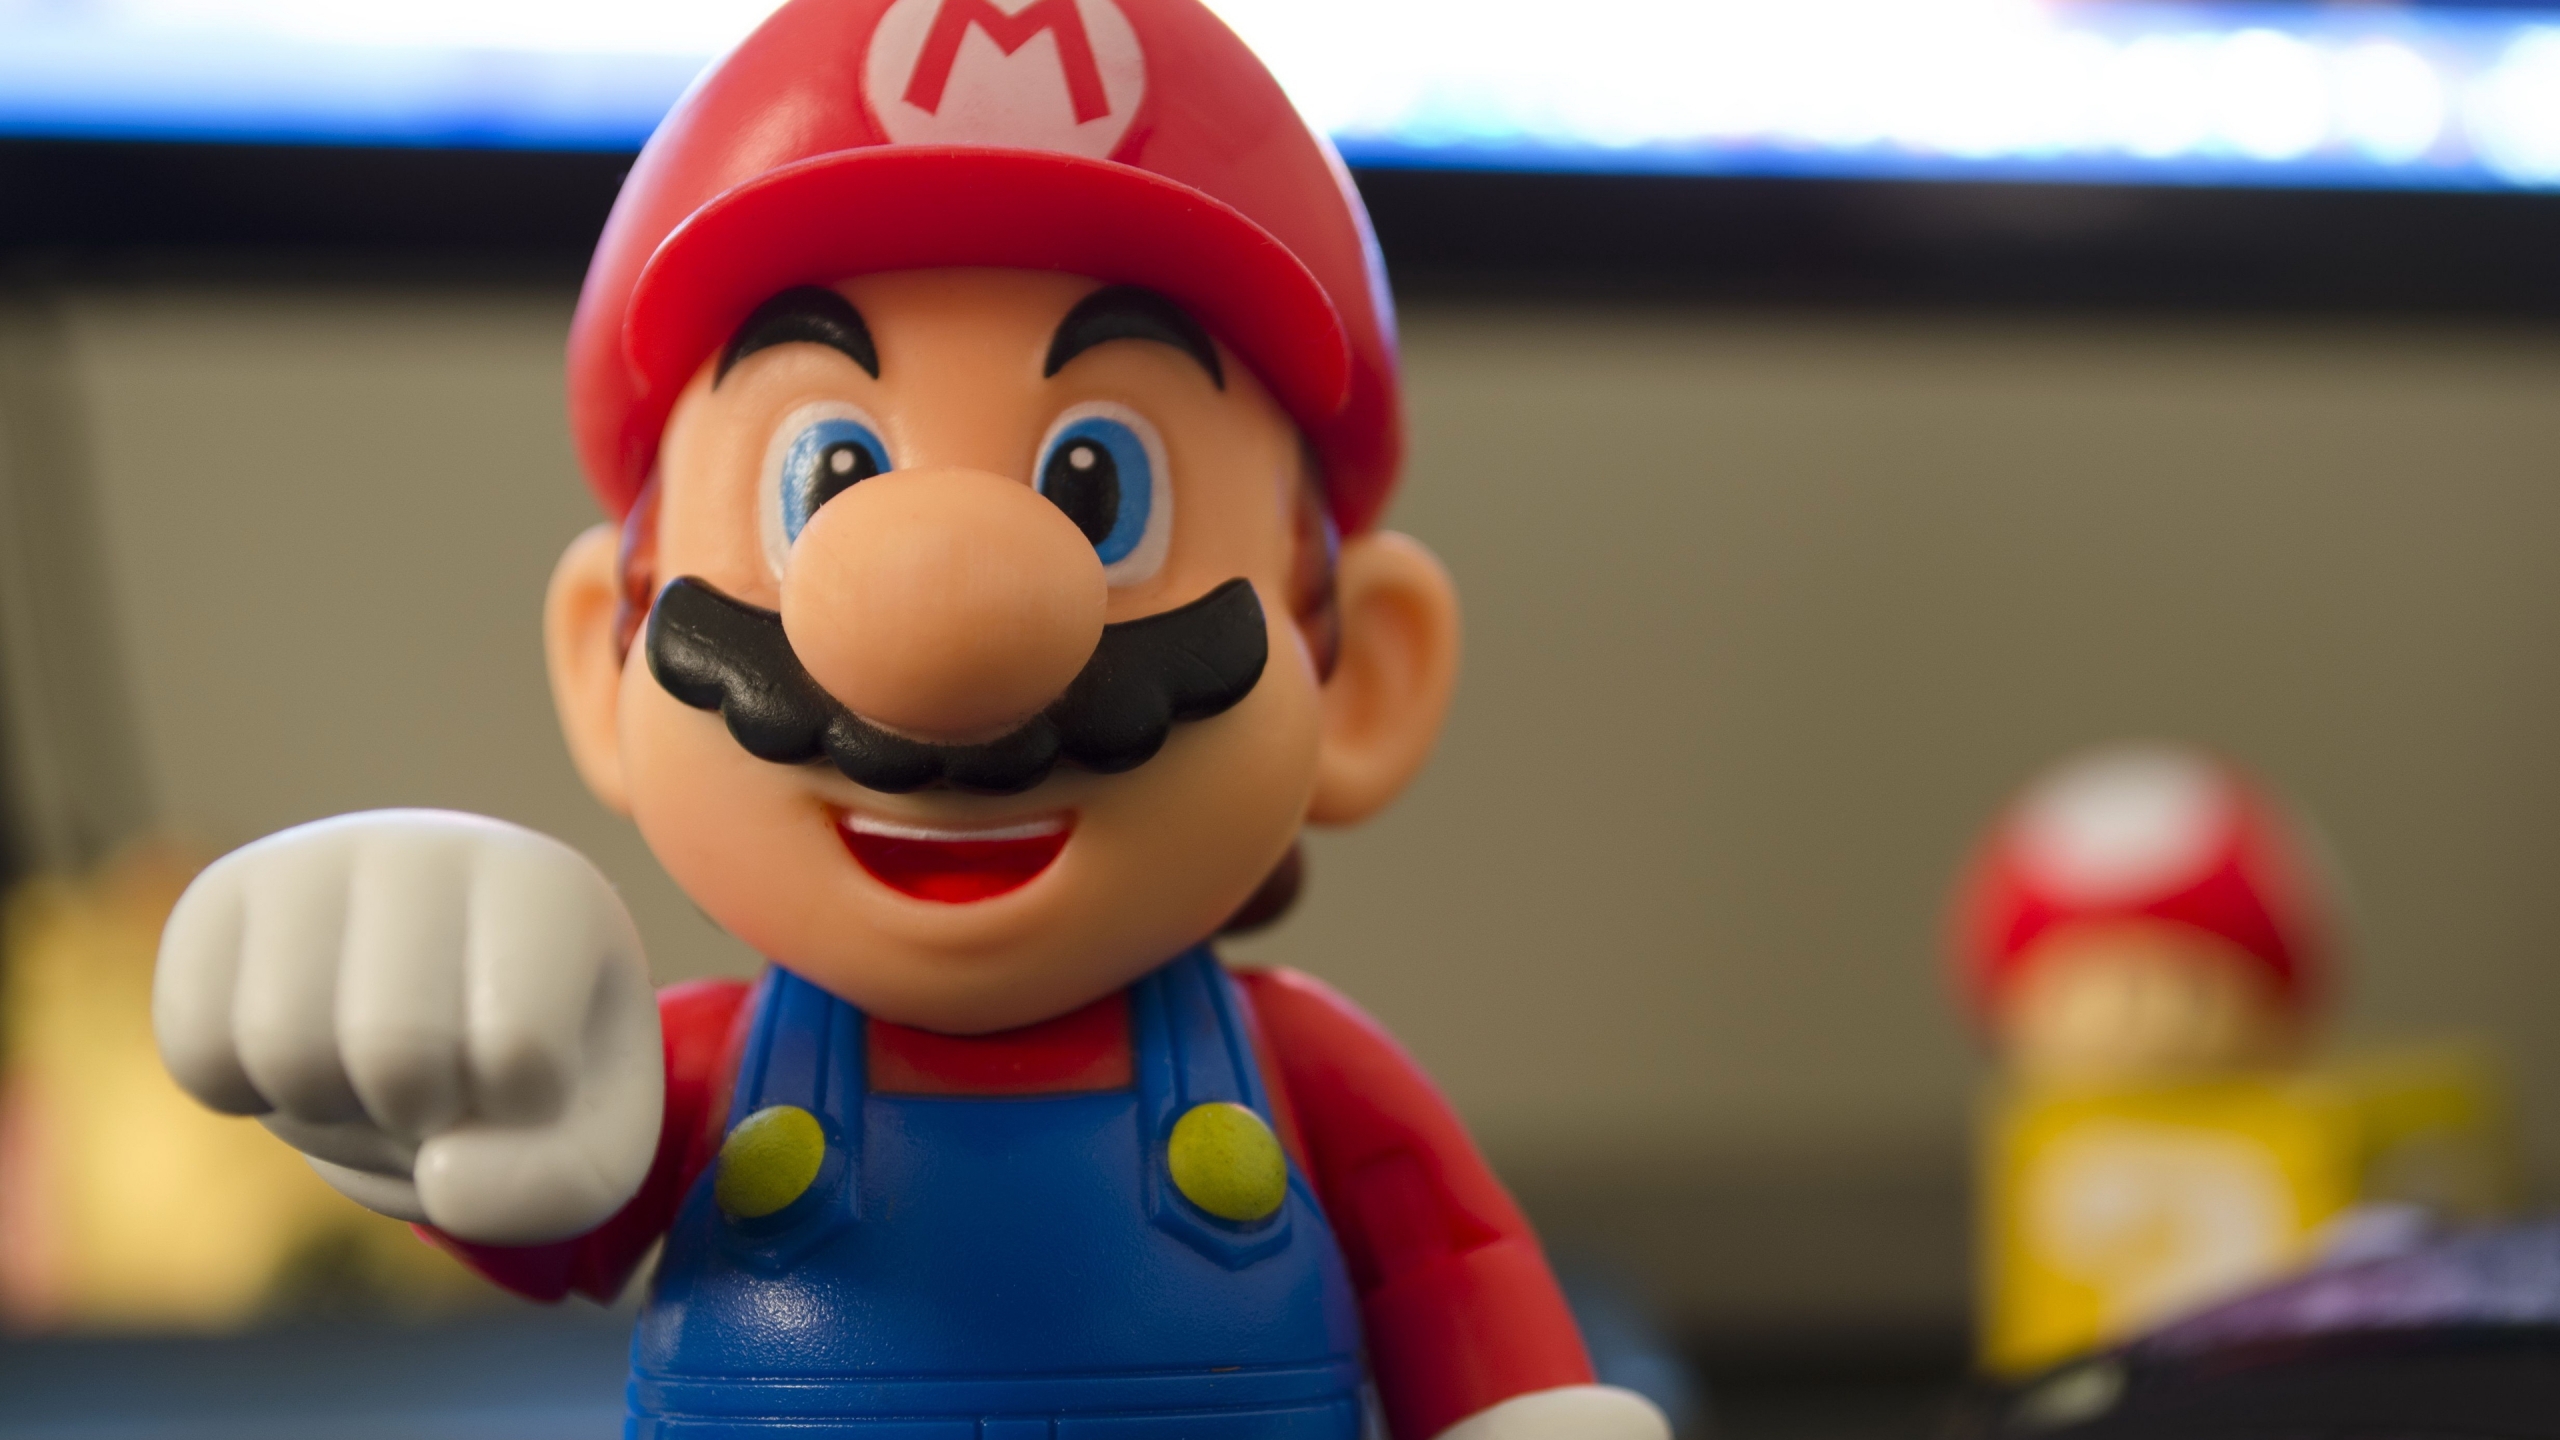 Super Mario Figurine for 2560x1440 HDTV resolution